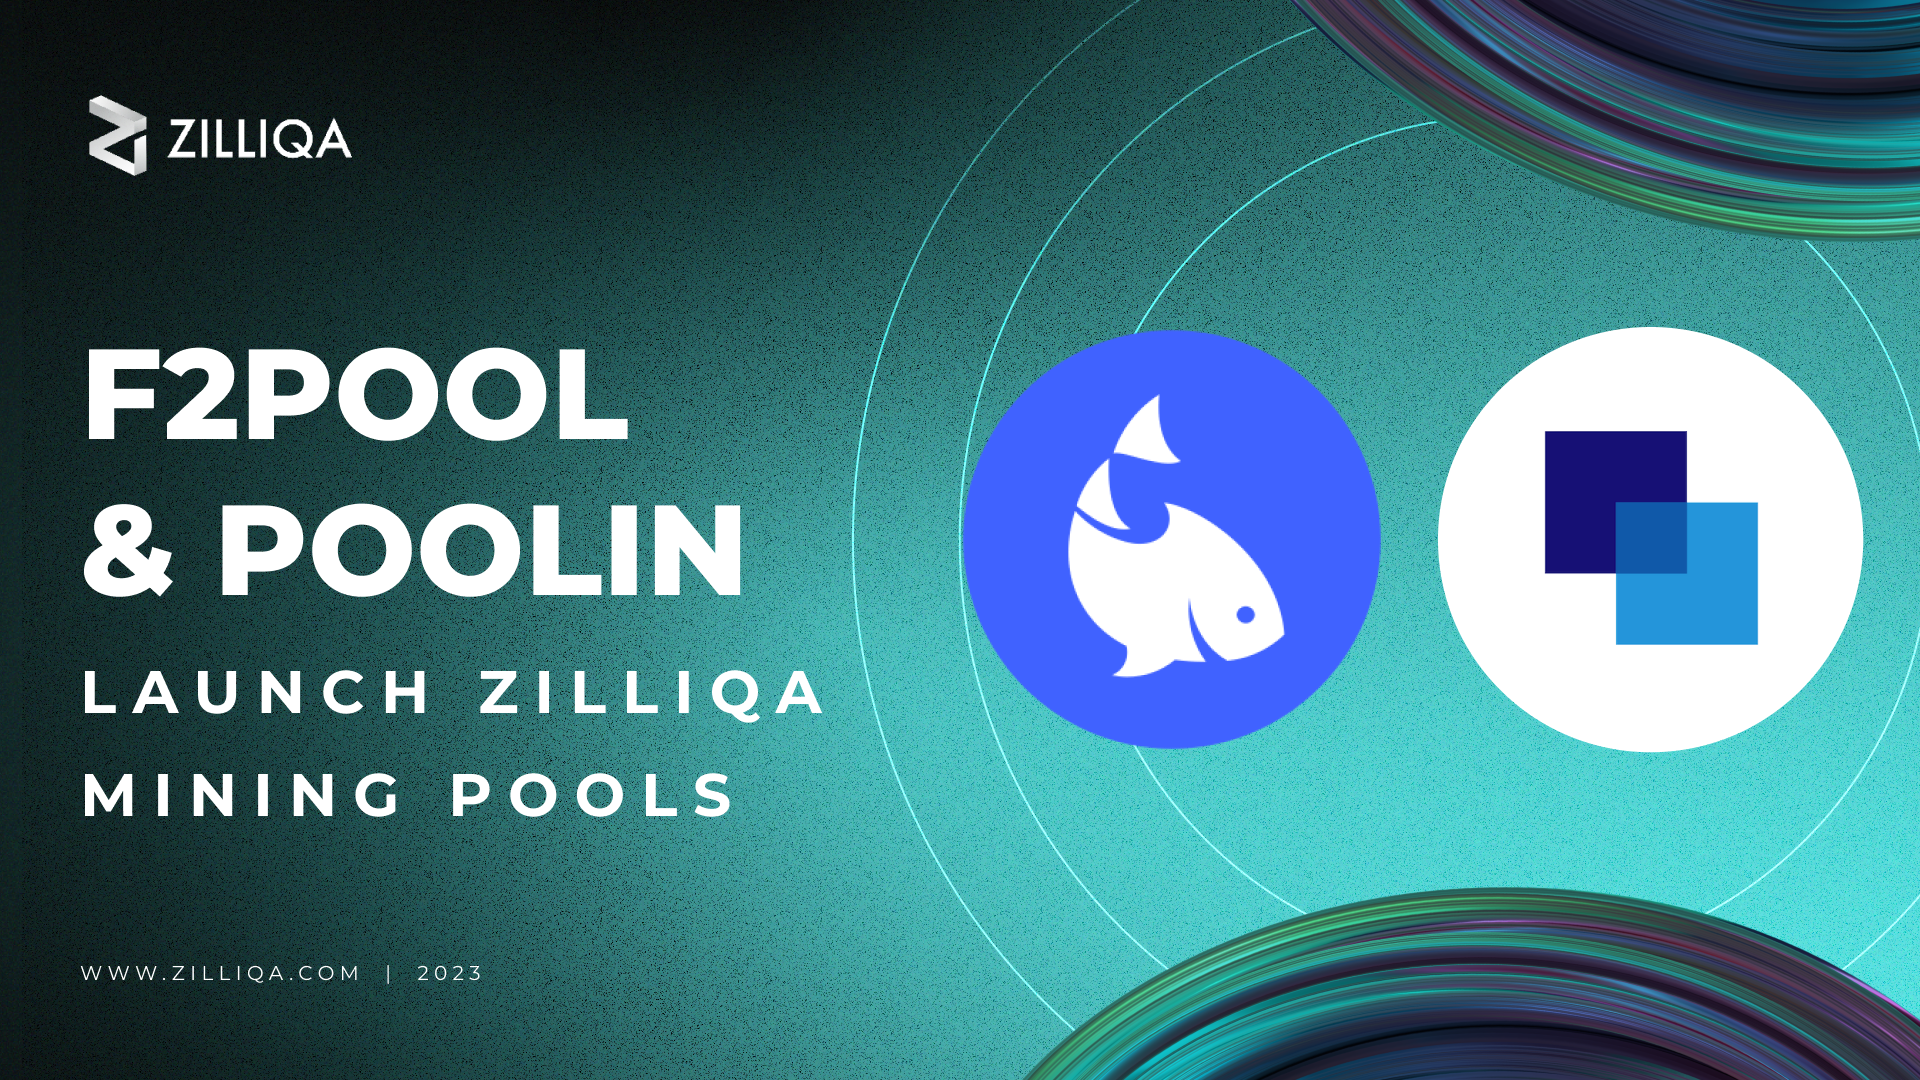 f2pool and Poolin launch Zilliqa mining pools